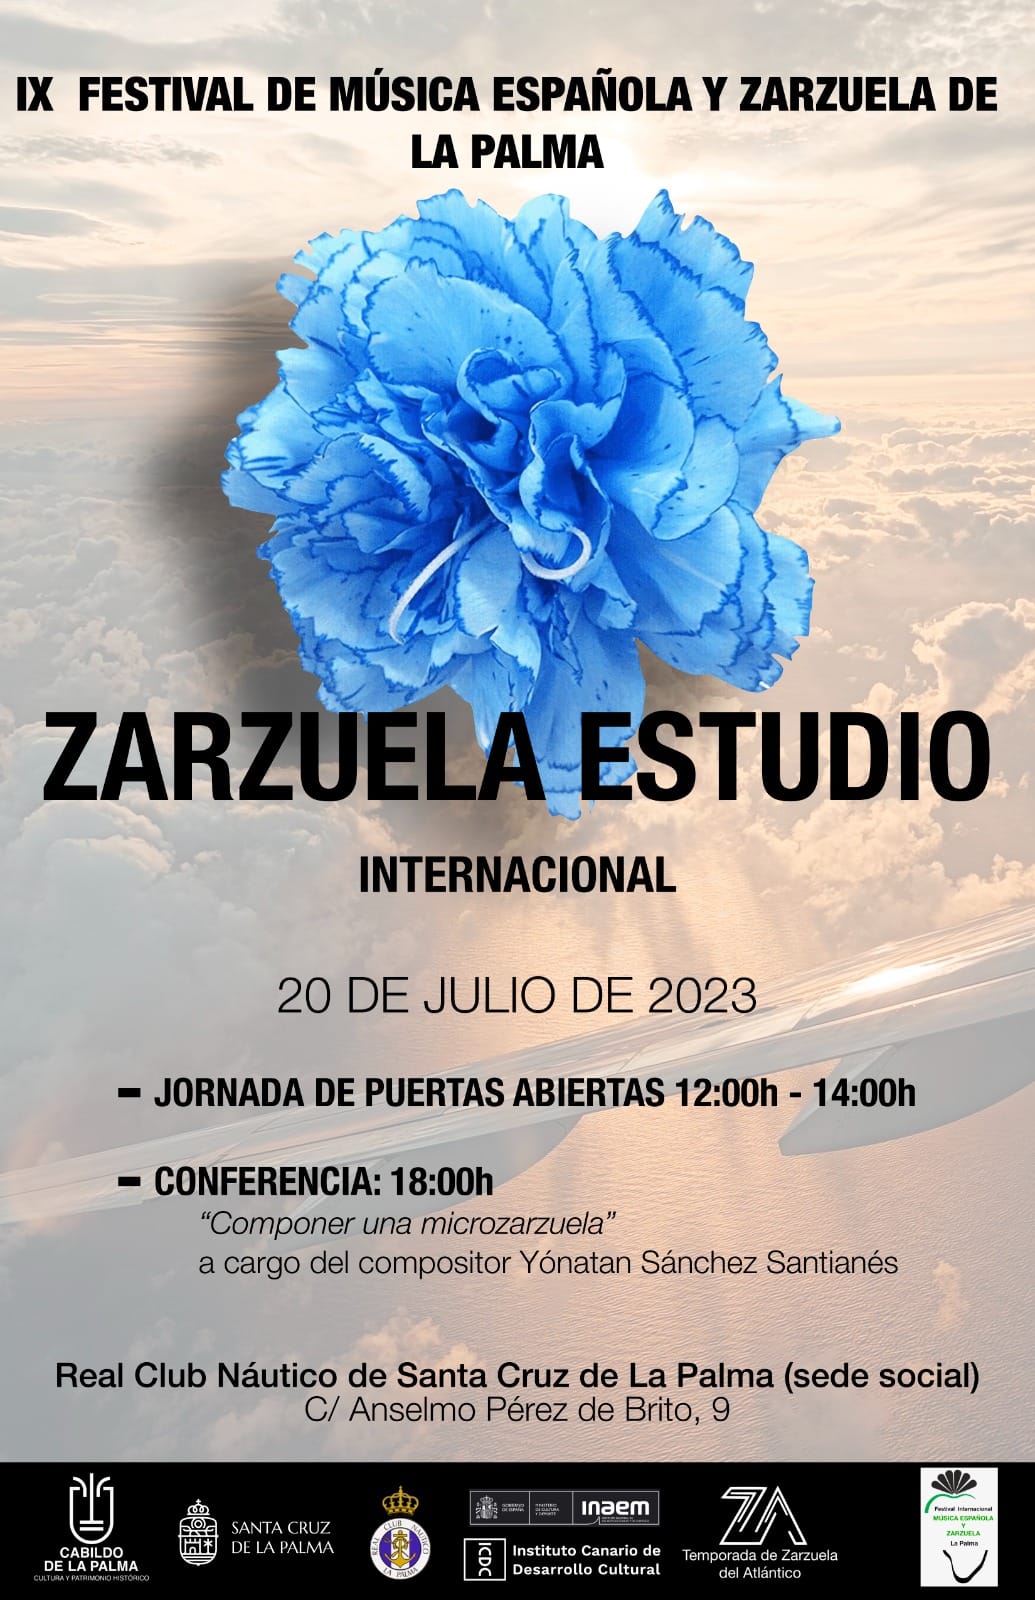 Jornada con Zarzuela Estudio Internacional